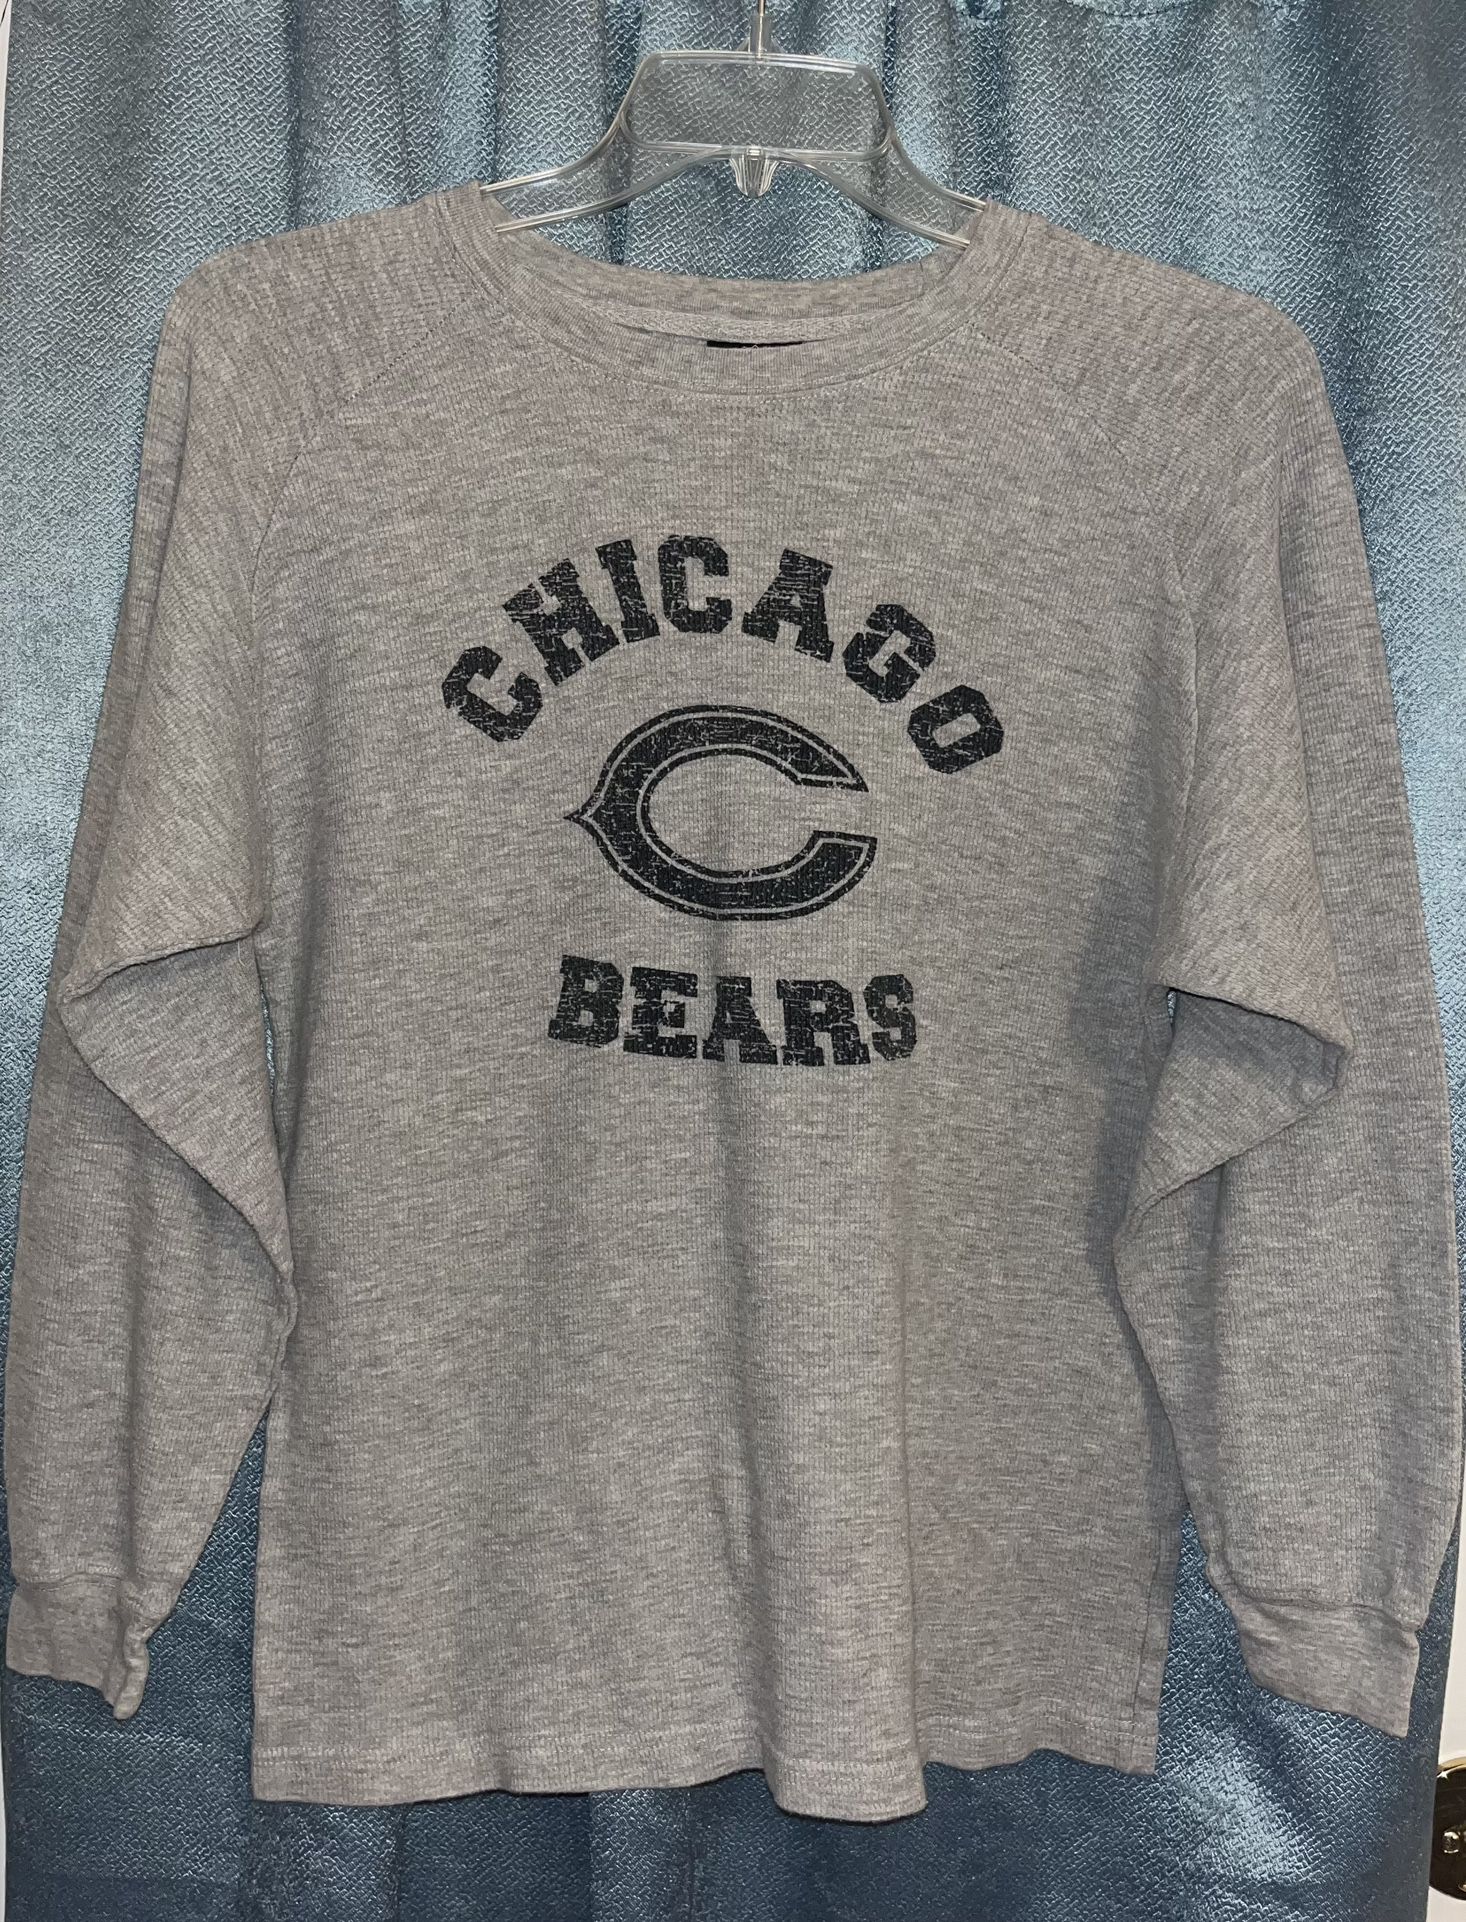 Chicago Bears Reebok NFL Team Apparel Boys Size 14/16